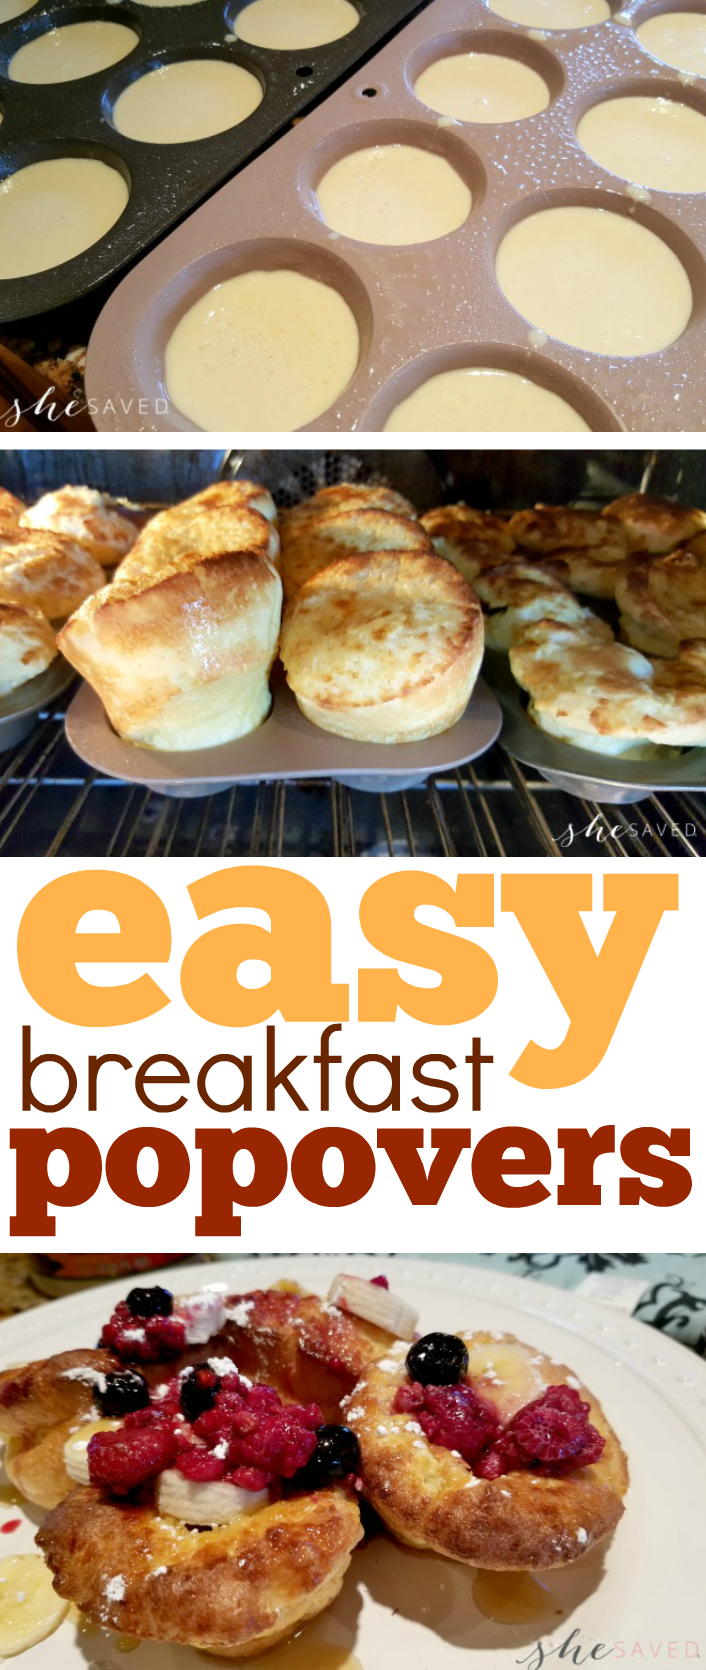 Easy breakfast popovers recipe